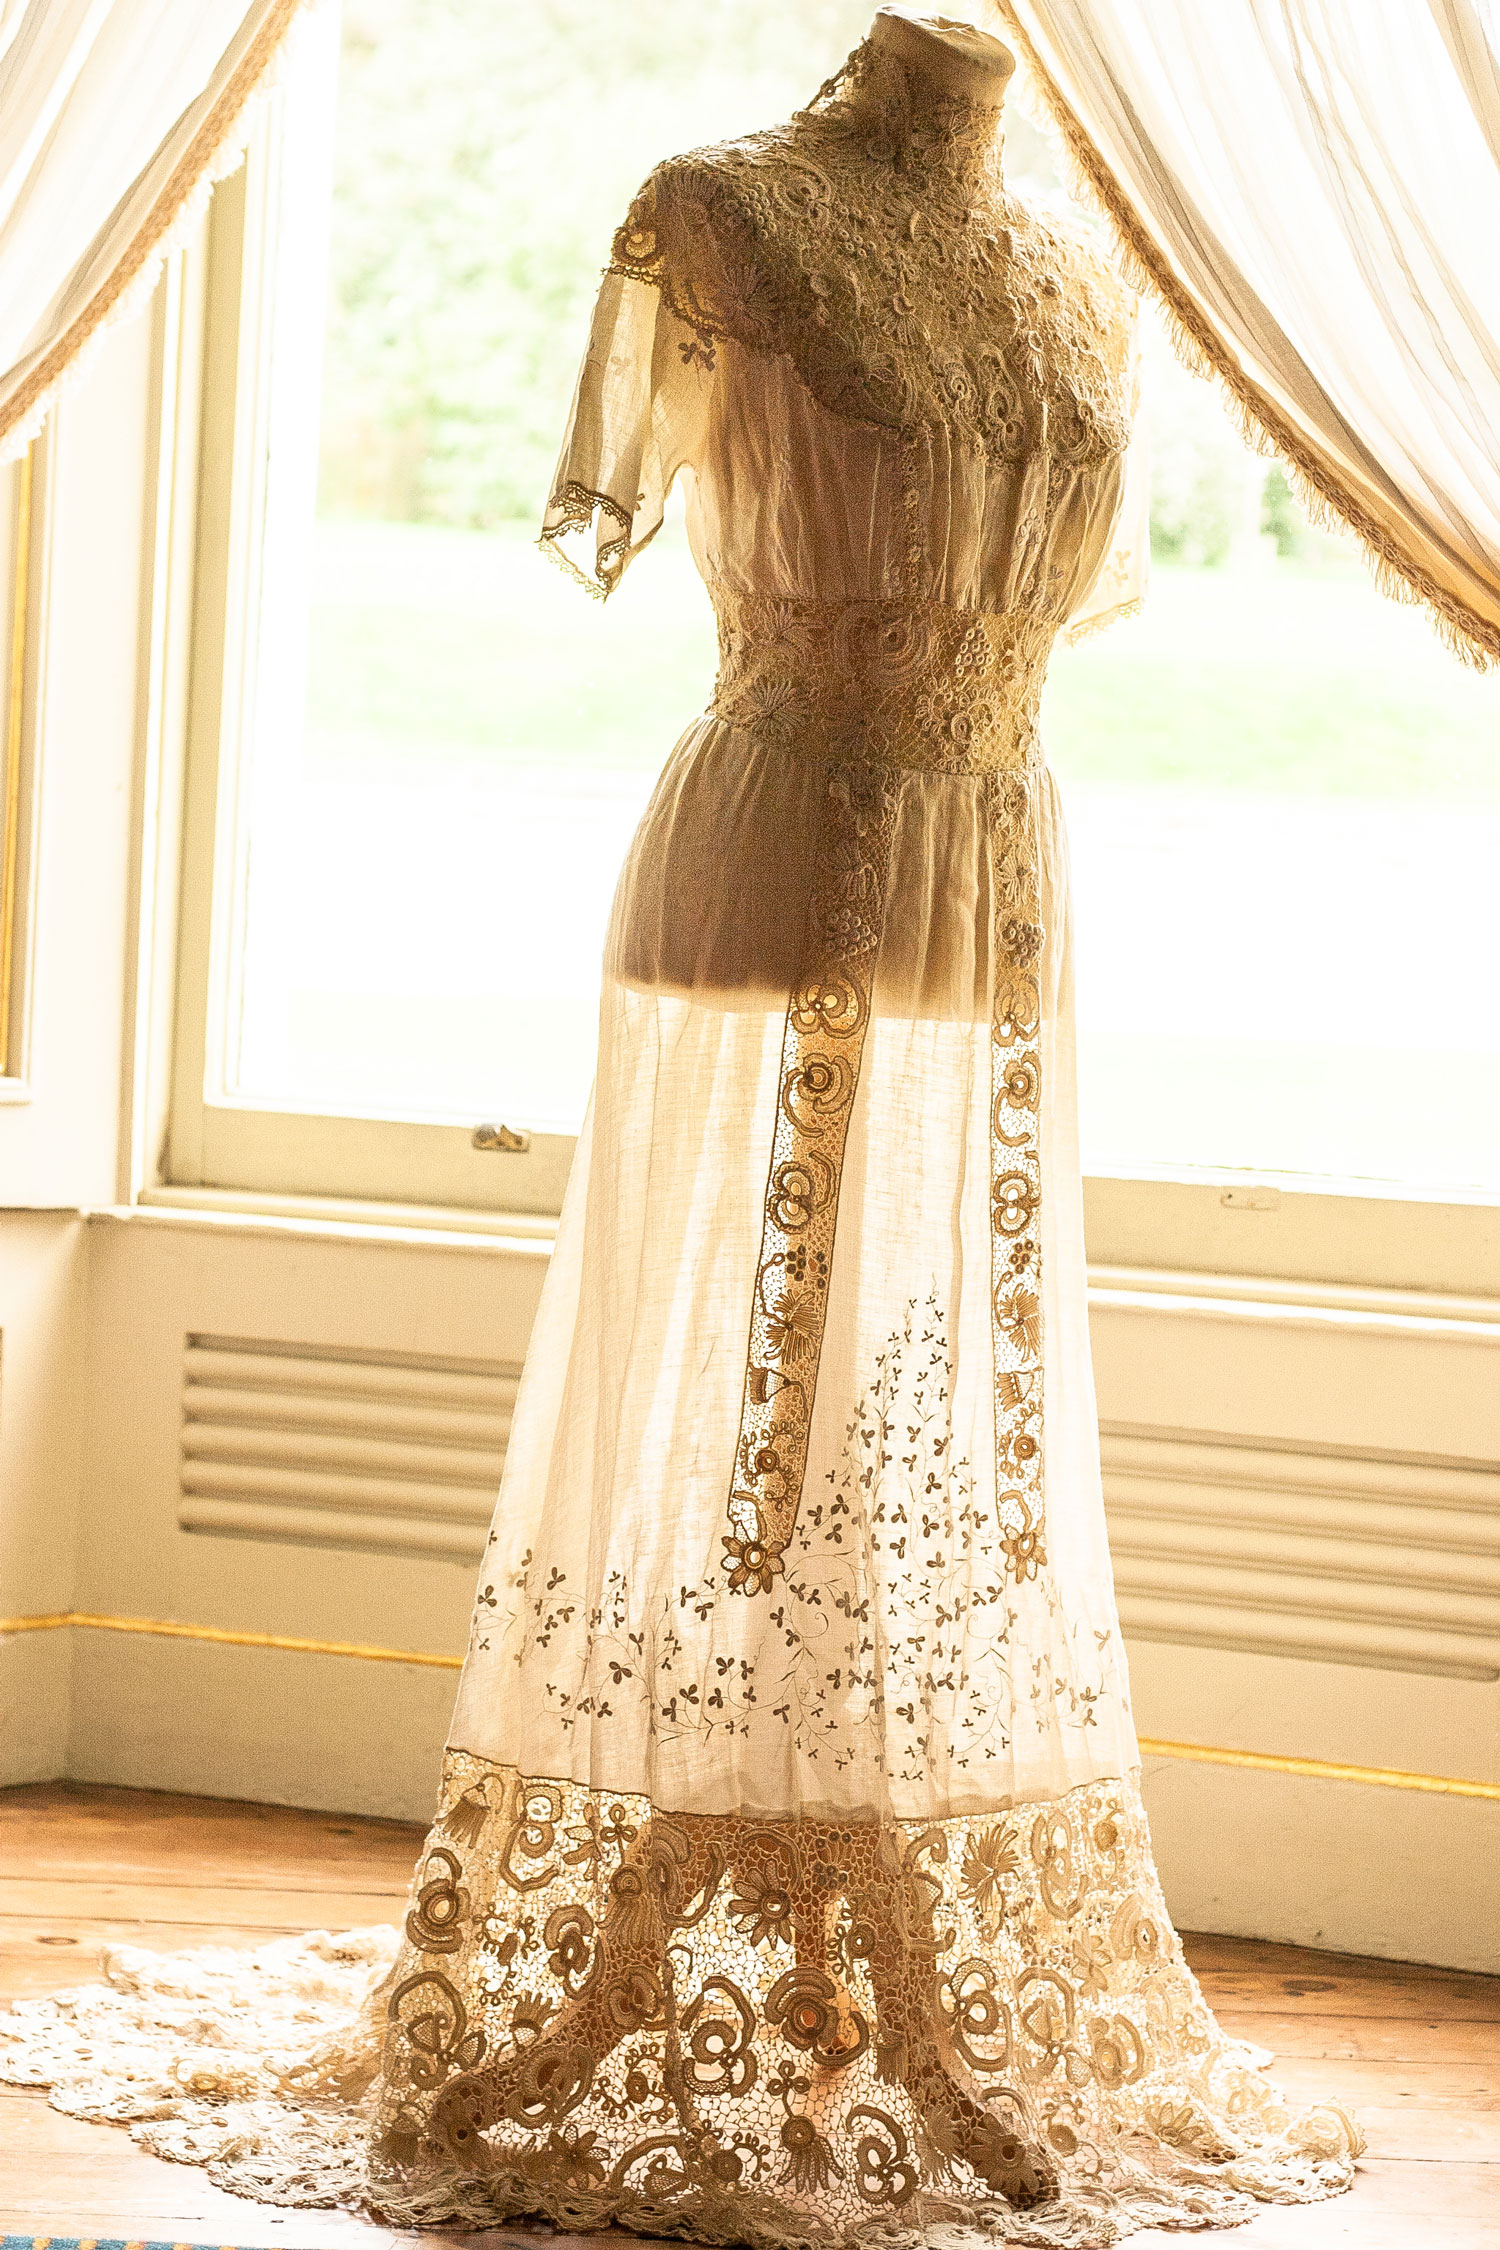 Linen dress with sprigging and Irish crochet